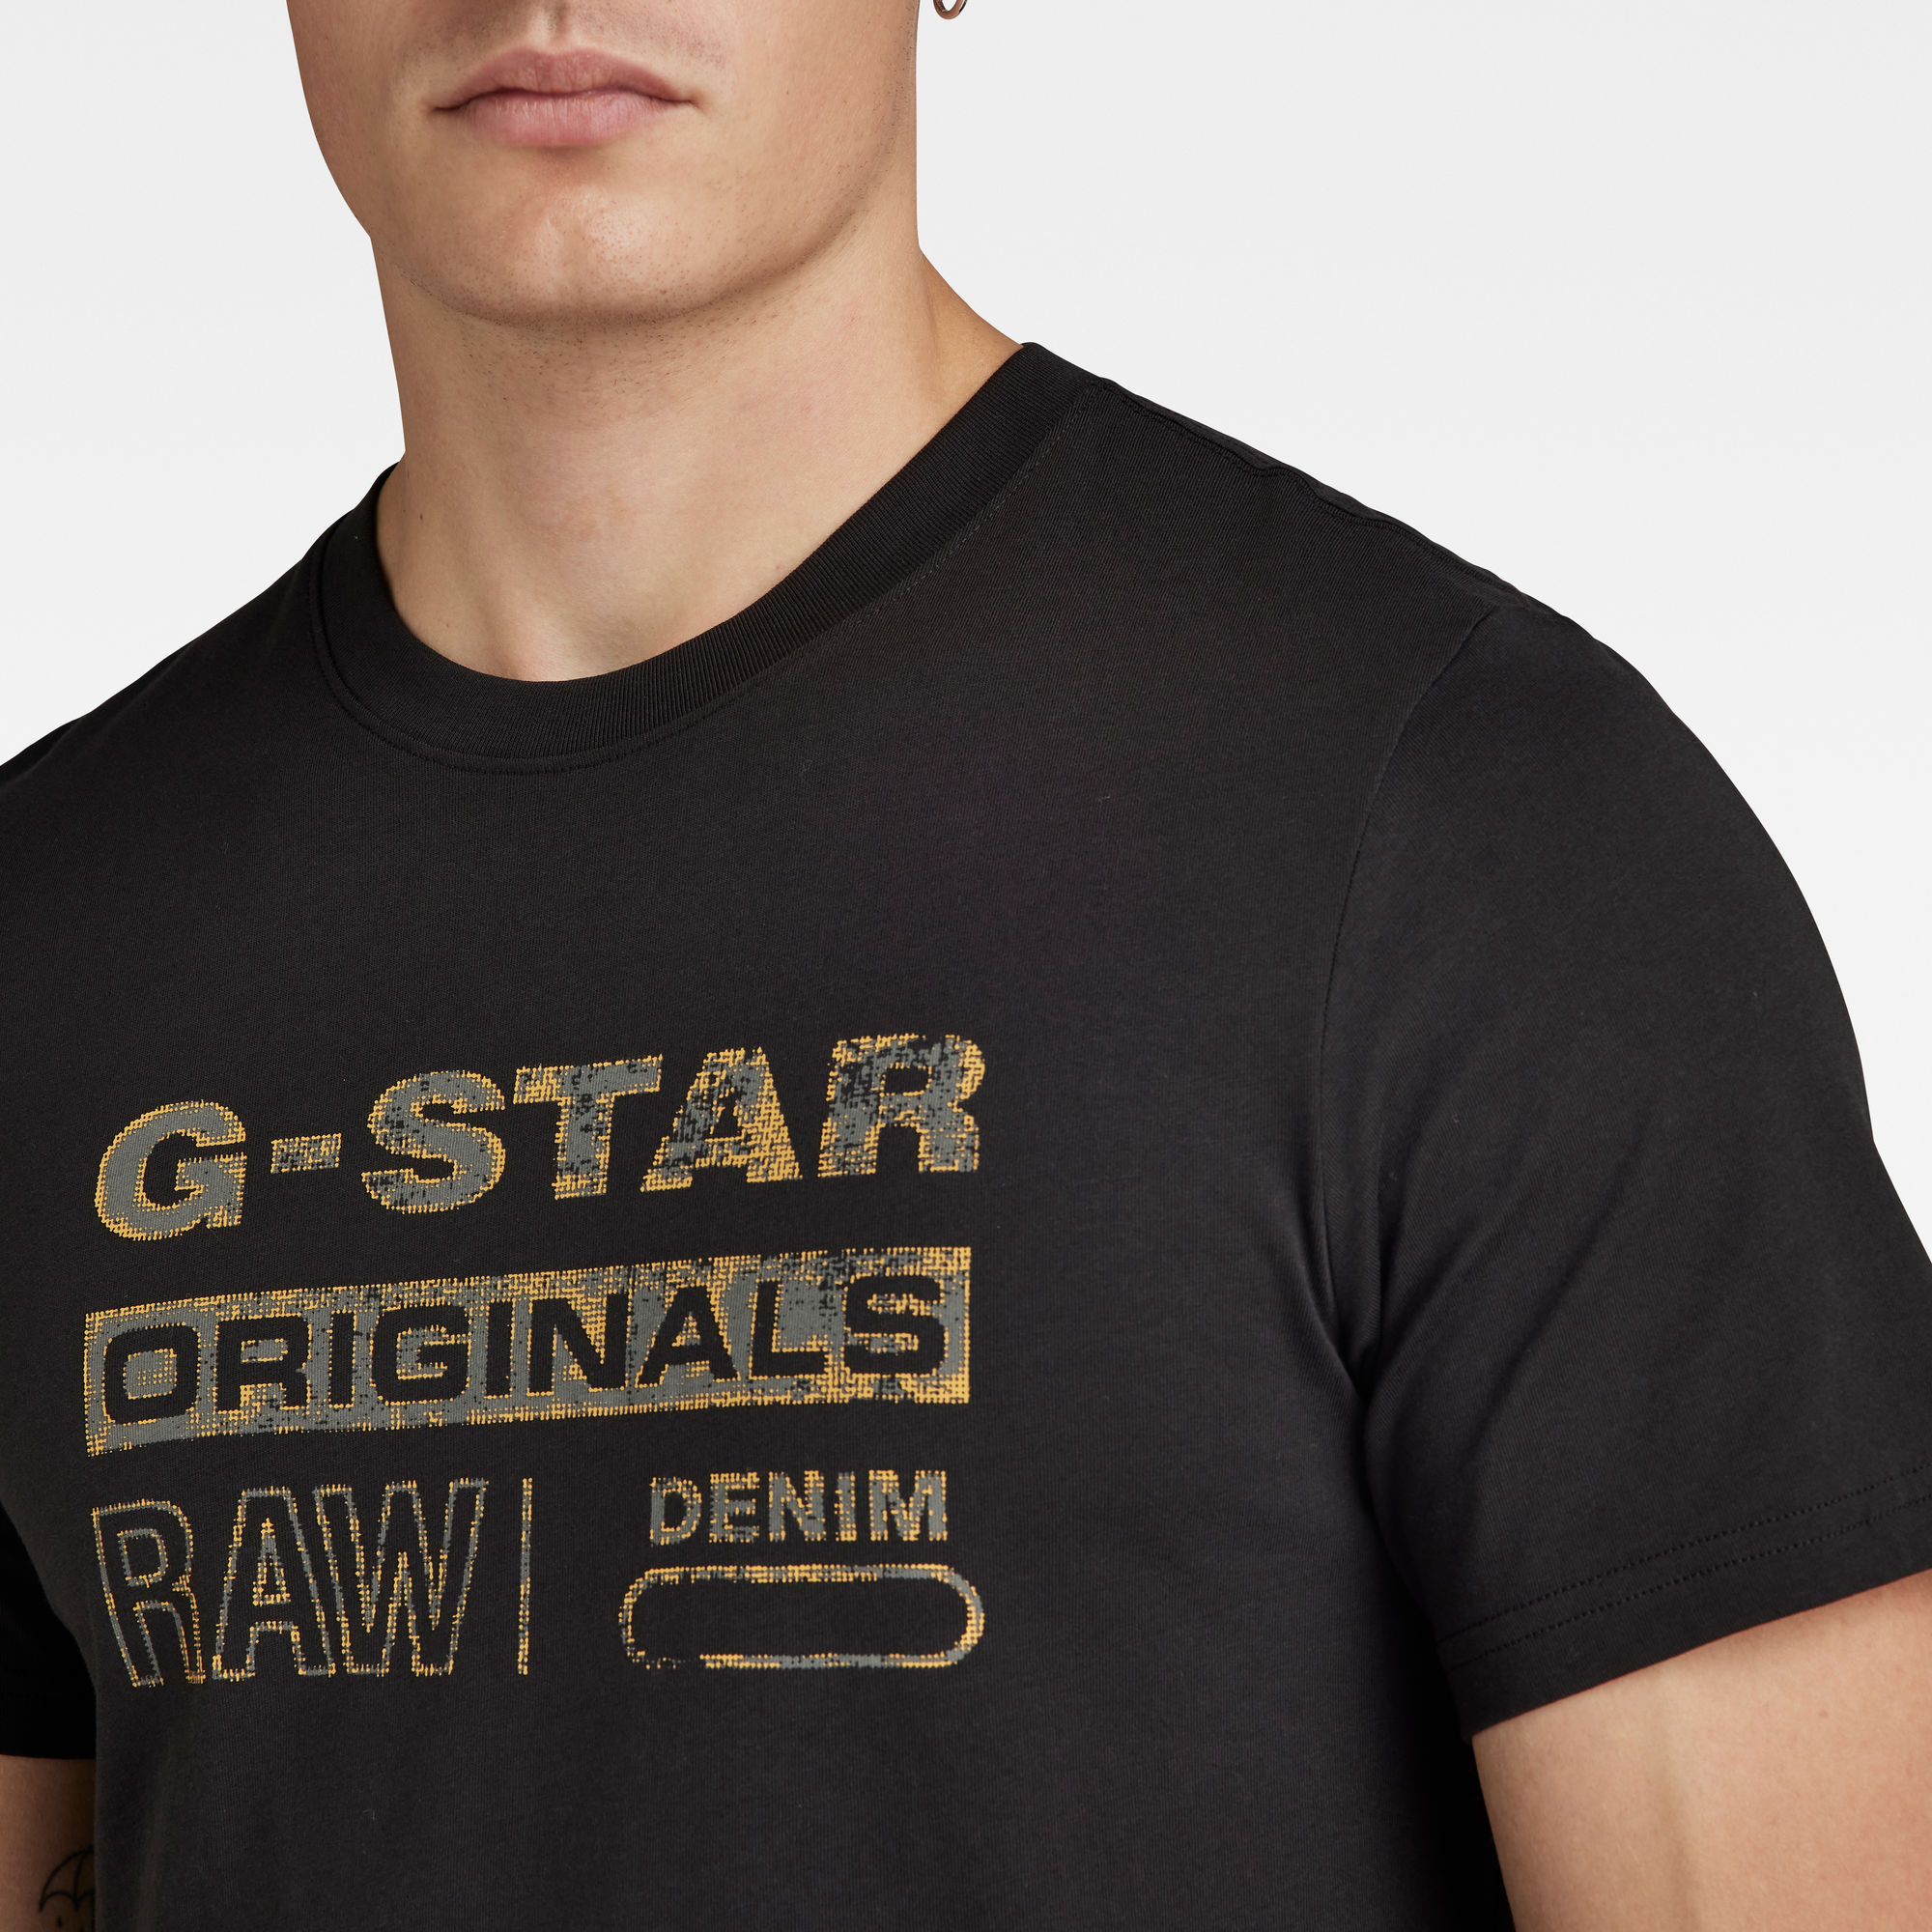 G-Star RAW Distressed Originals Slim T-Shirt Zwart Heren